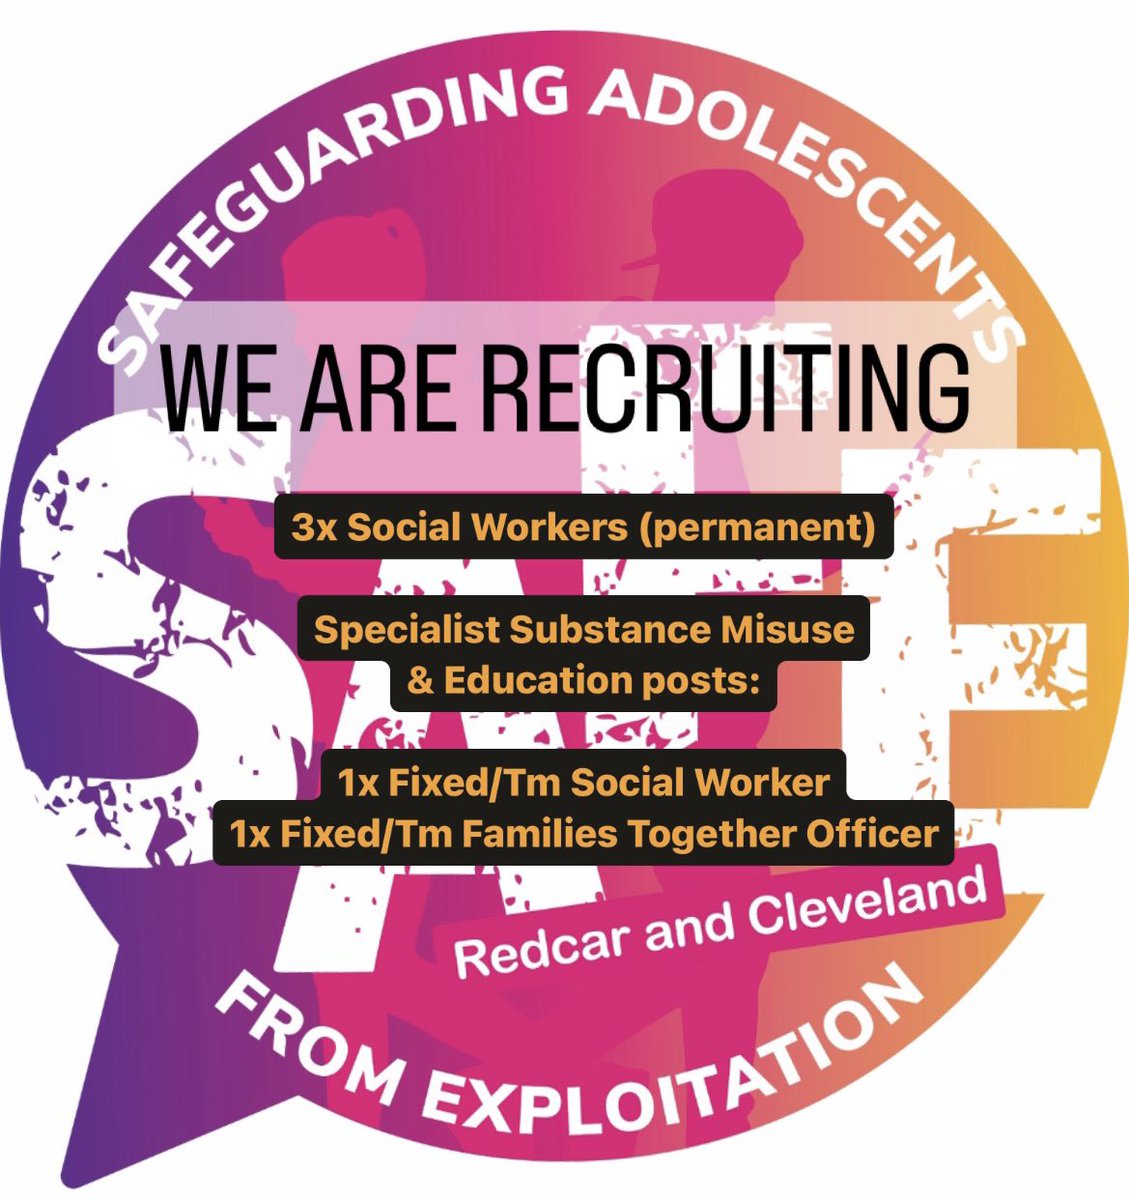 #exploitation #jobs #career #socialwork #familysupport #cce #cse #safeguarding #youthwork #childrensservices @RedcarCleveland @PSWRedcar